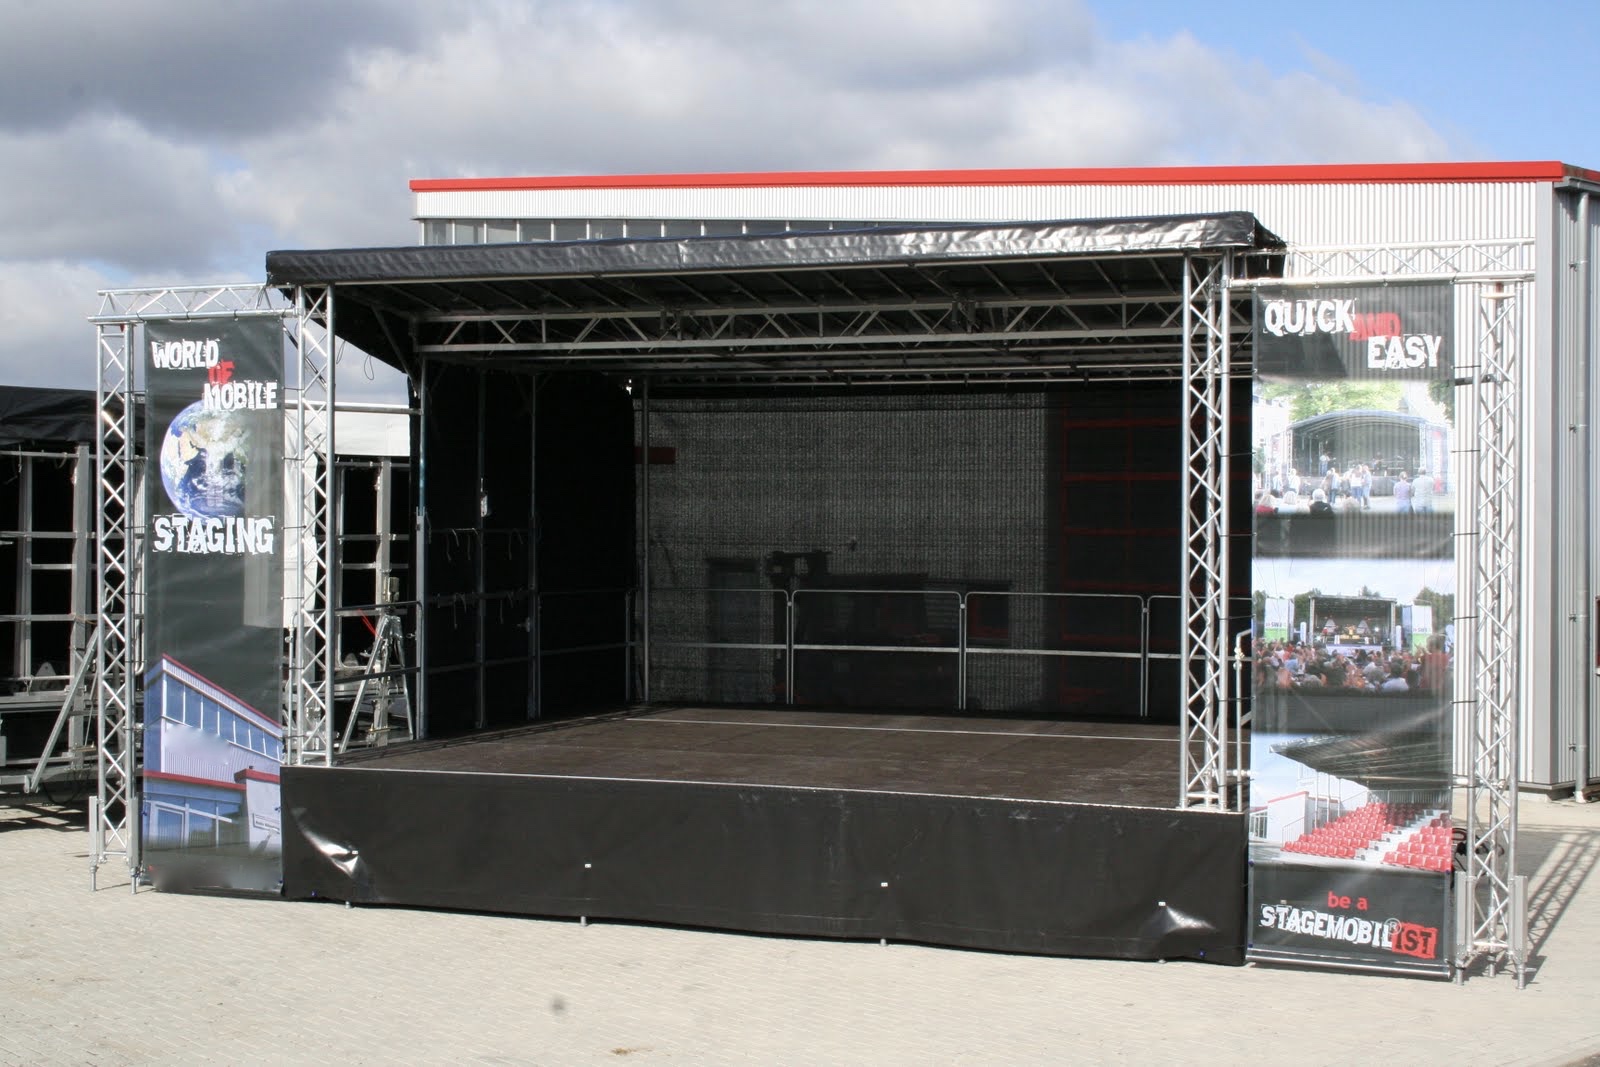 2019 Stagemobil Oberpfalz